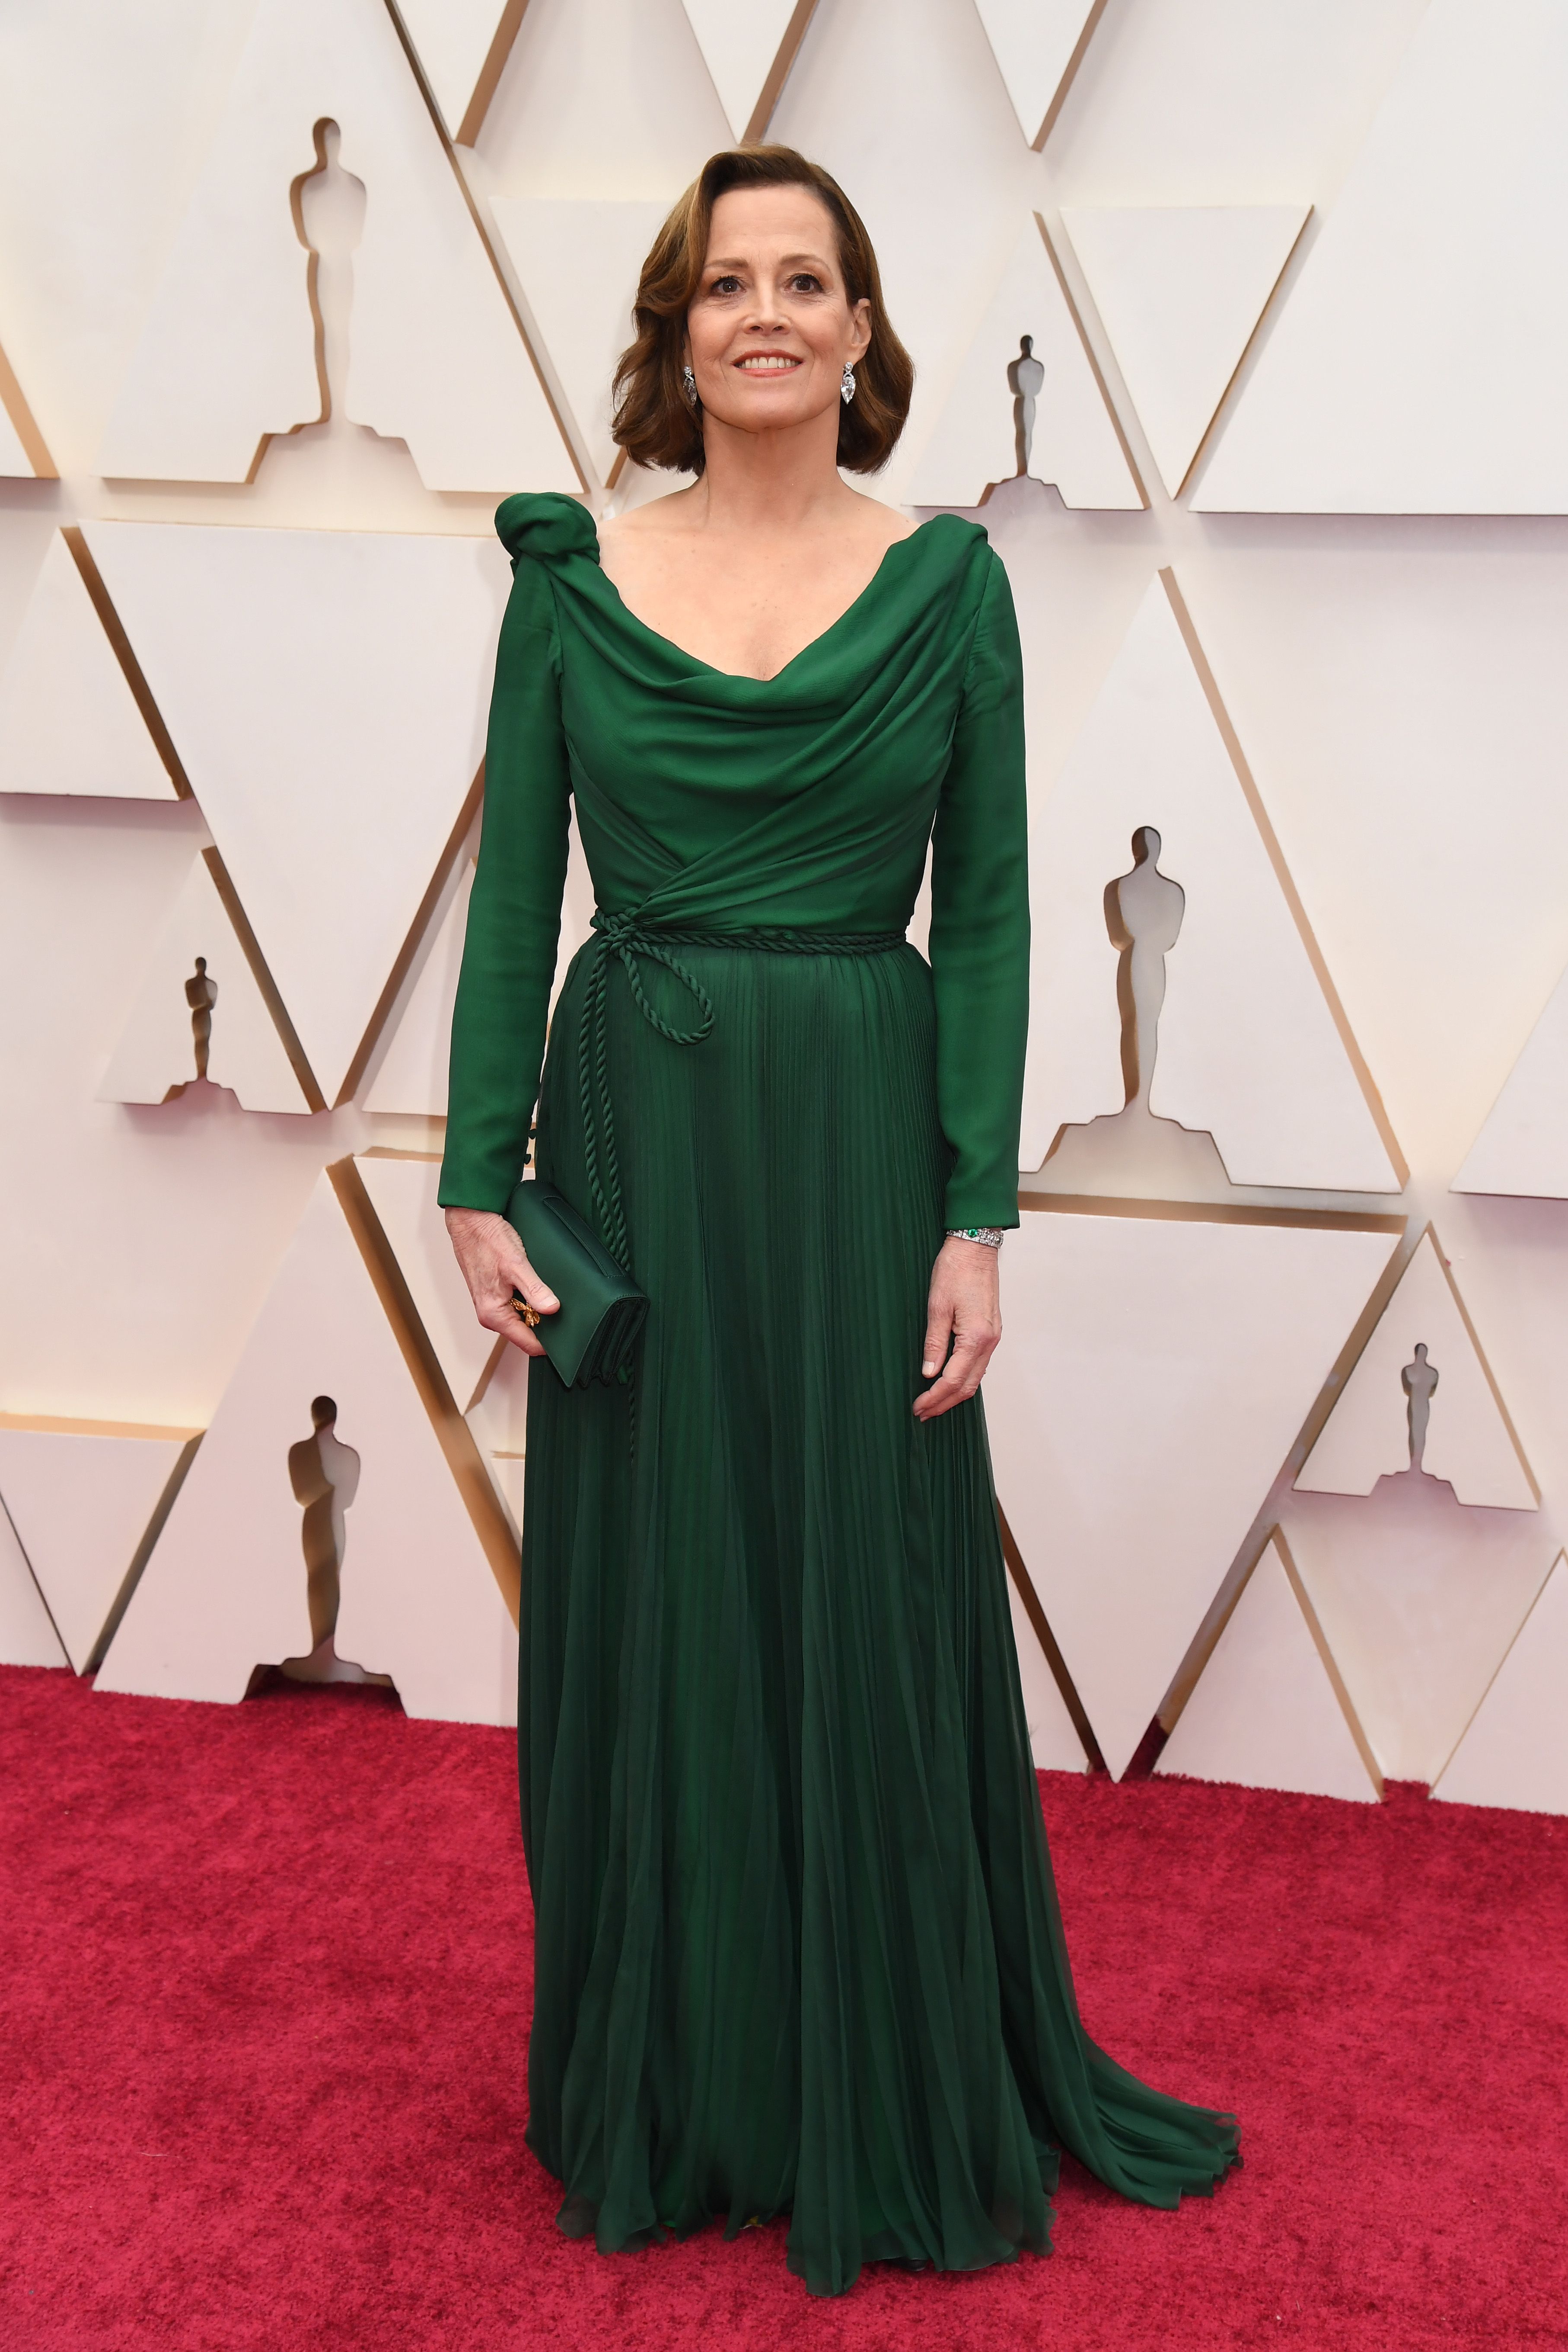 Oscars 2020 Red Carpet Fashion: Best-Dressed Celebrity Dresses, Gowns